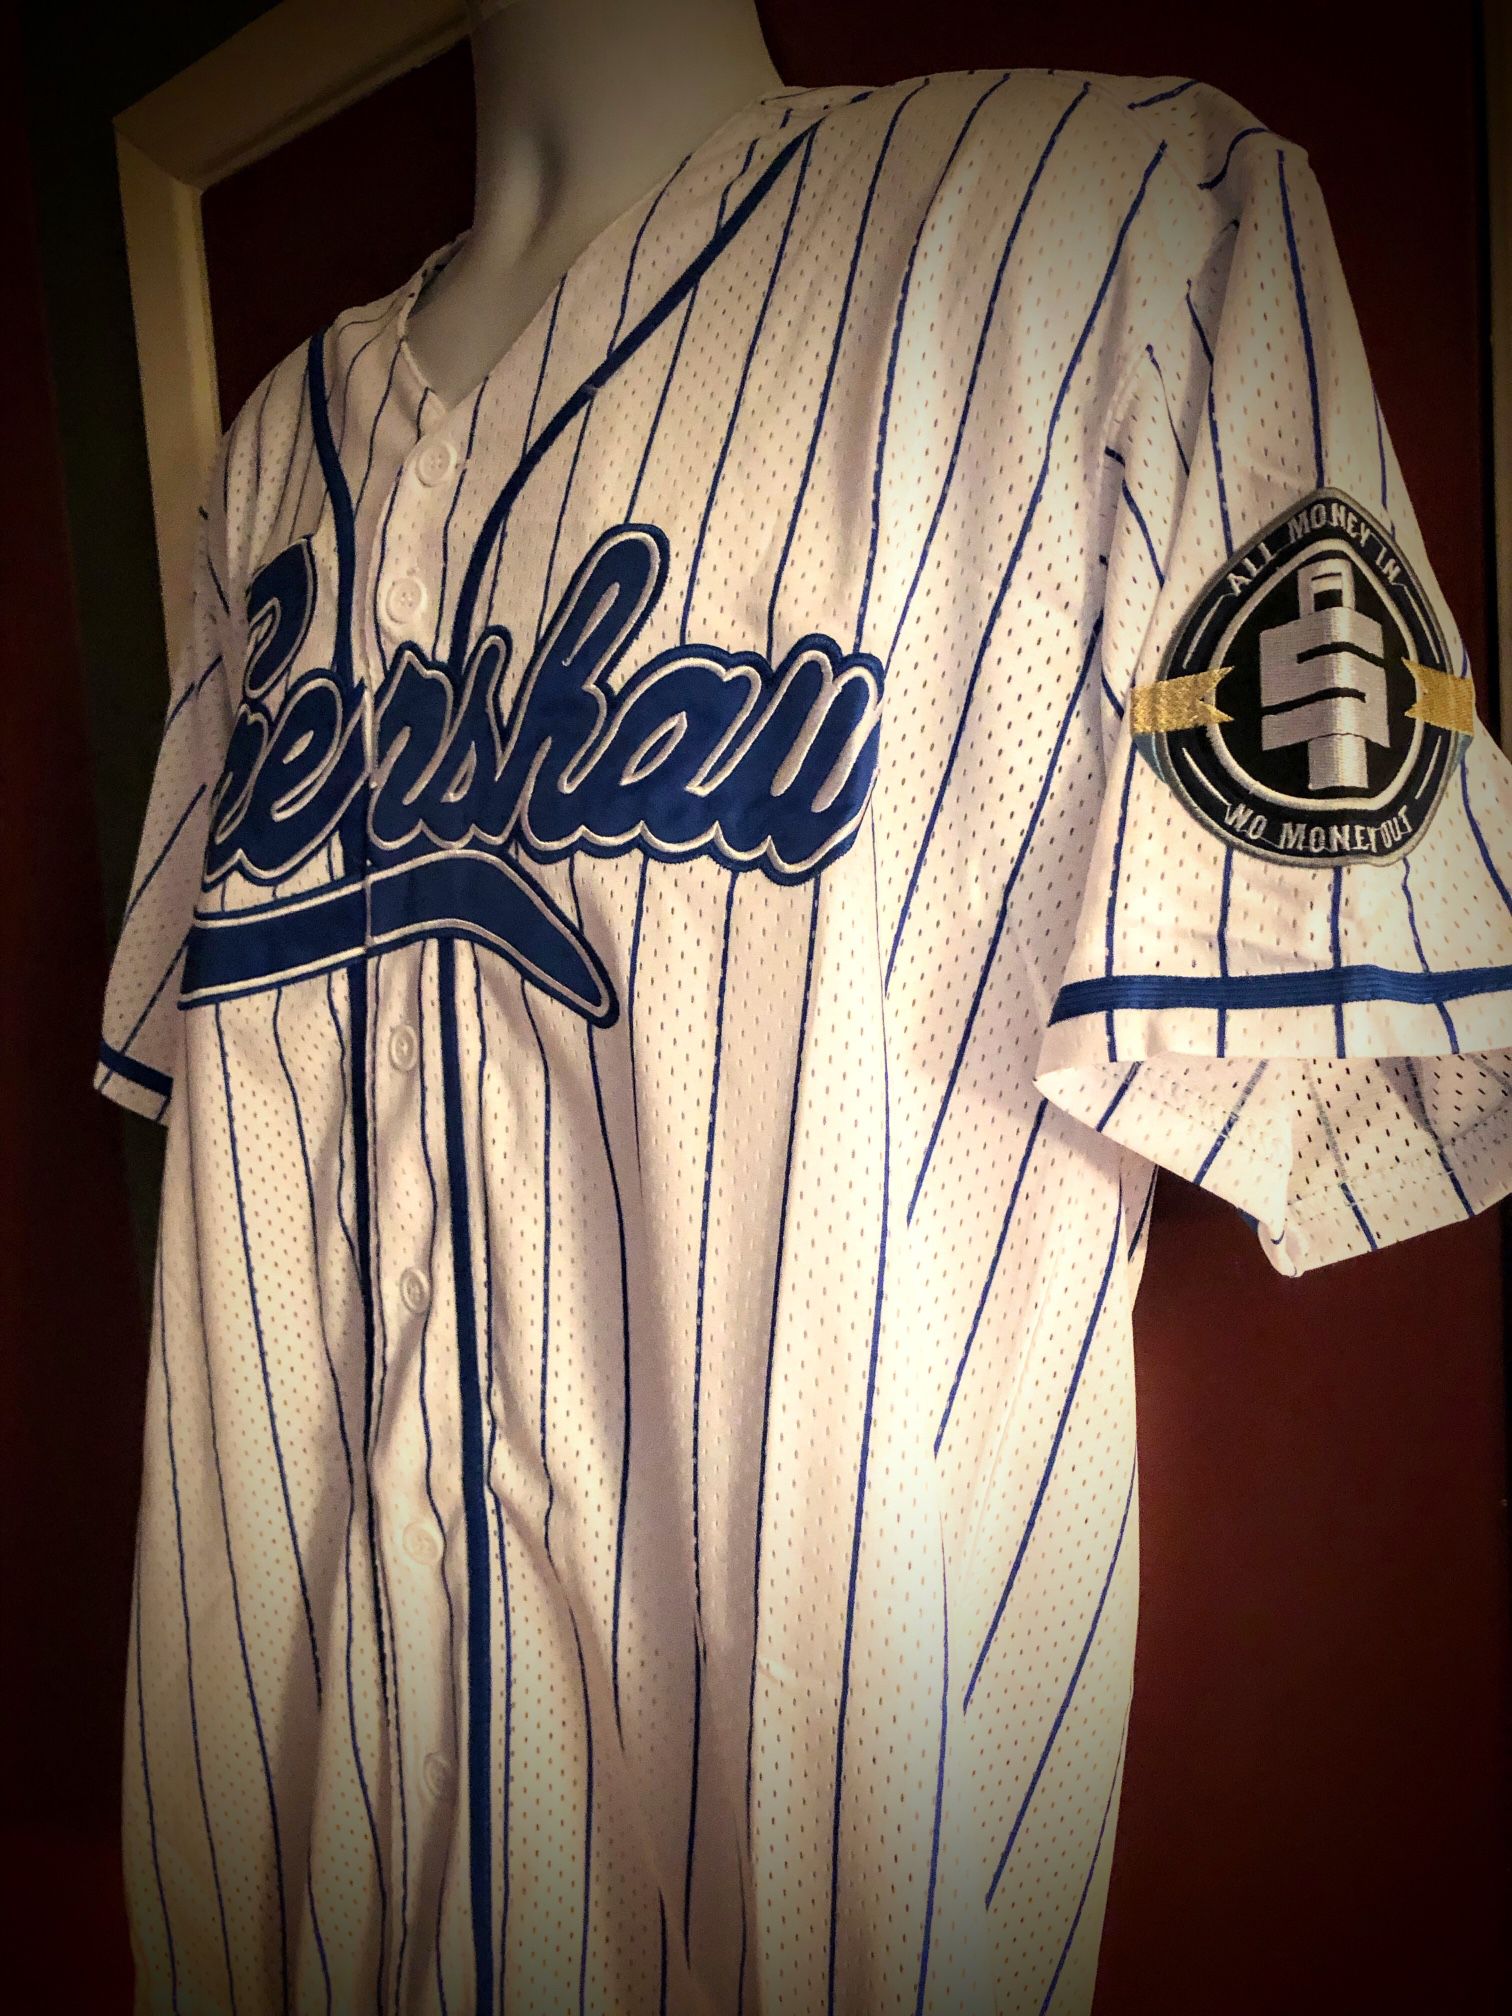 Nipsey Hussle 33 Crenshaw High School Blue Baseball Jersey — BORIZ